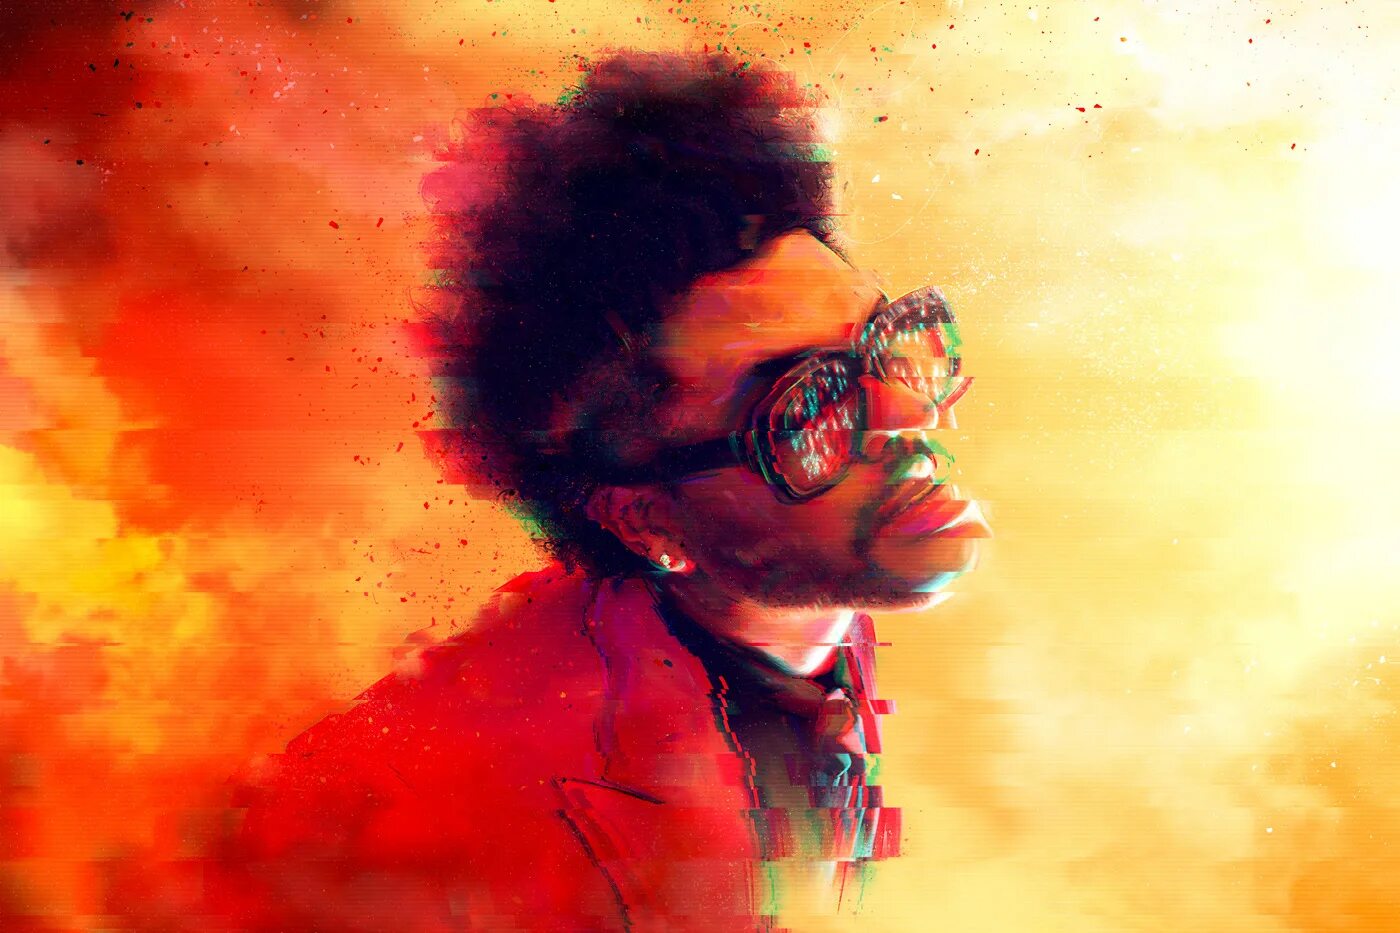 The Weeknd Blinding Lights. The Weeknd Art Blinding Lights. The weekend арт. The Weeknd арты.